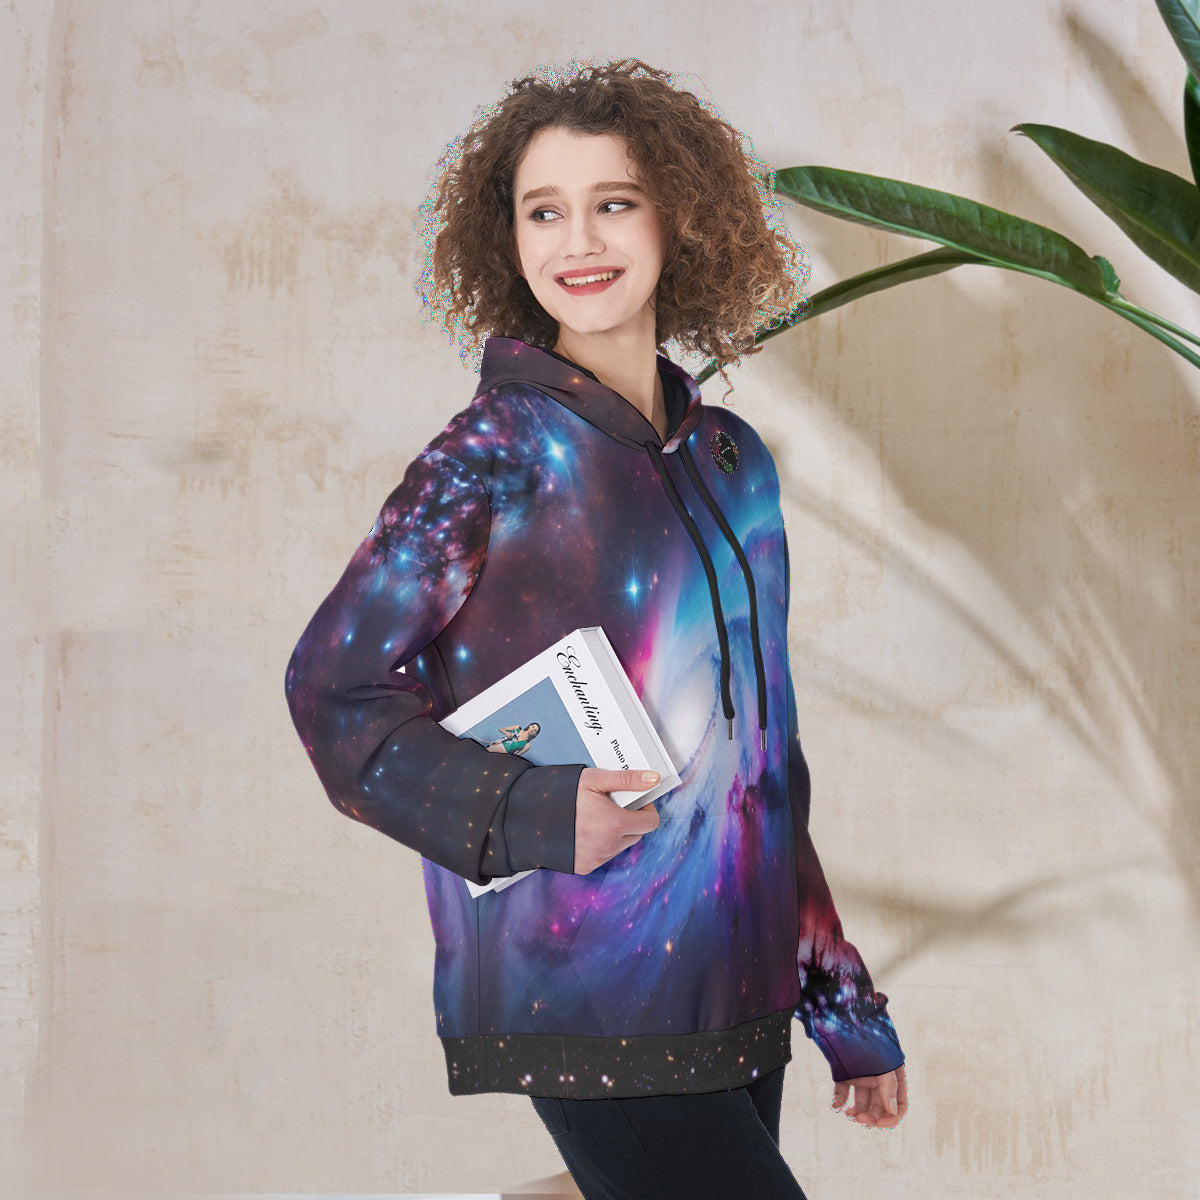 Interstellar Consciousness Women's Heavy Fleece Fashion Hoodie The Nebula Palace: Spiritually Cosmic Fashion